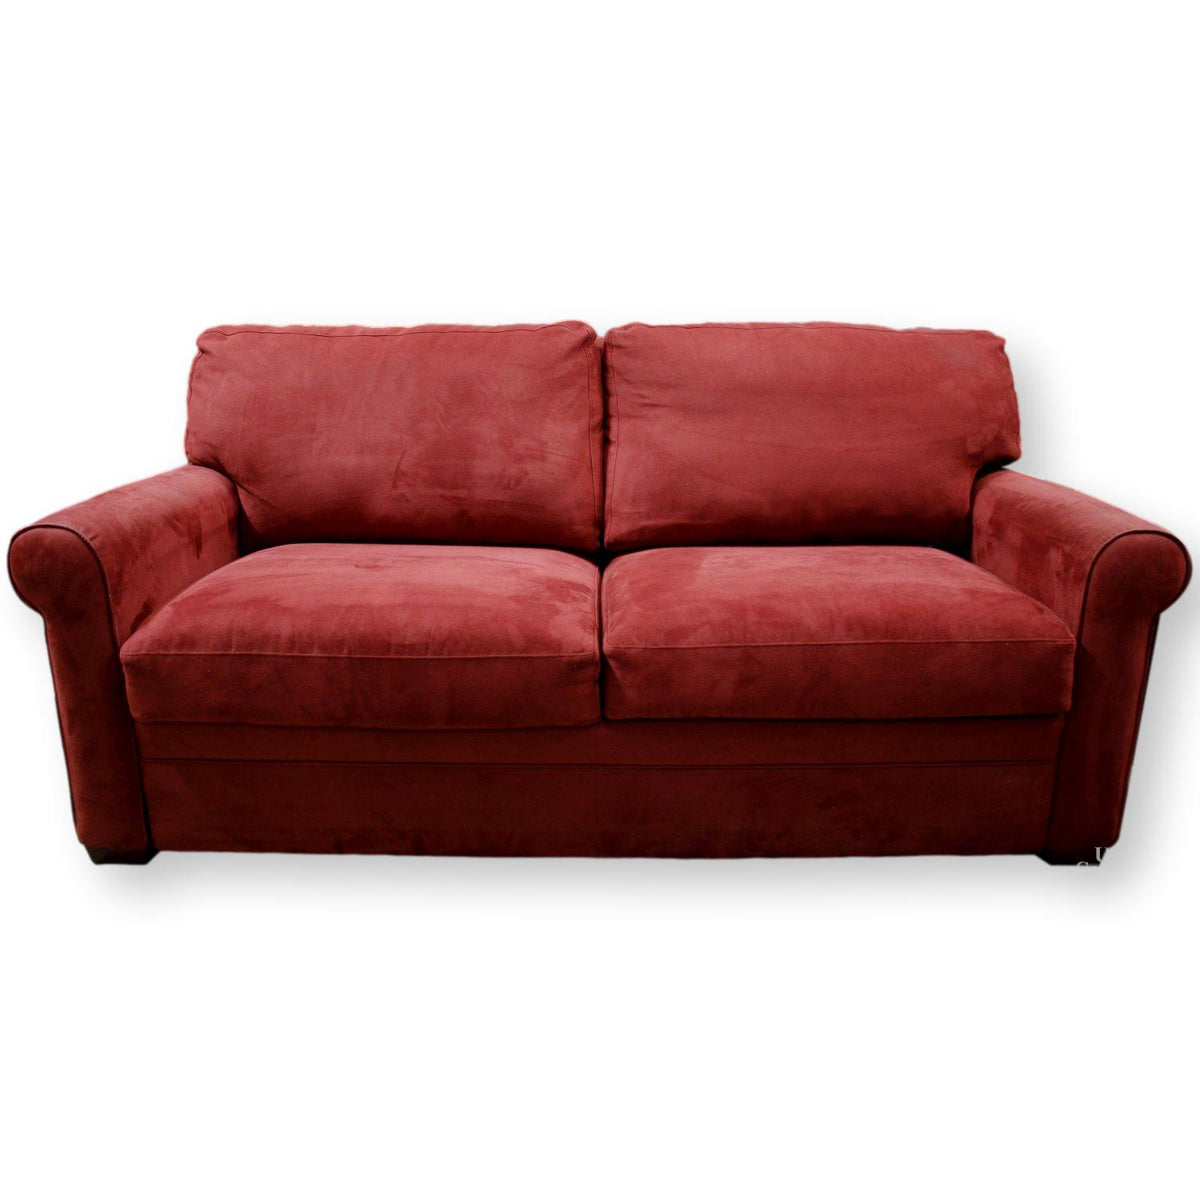 American Leather Queen Microfiber Sleeper Sofa